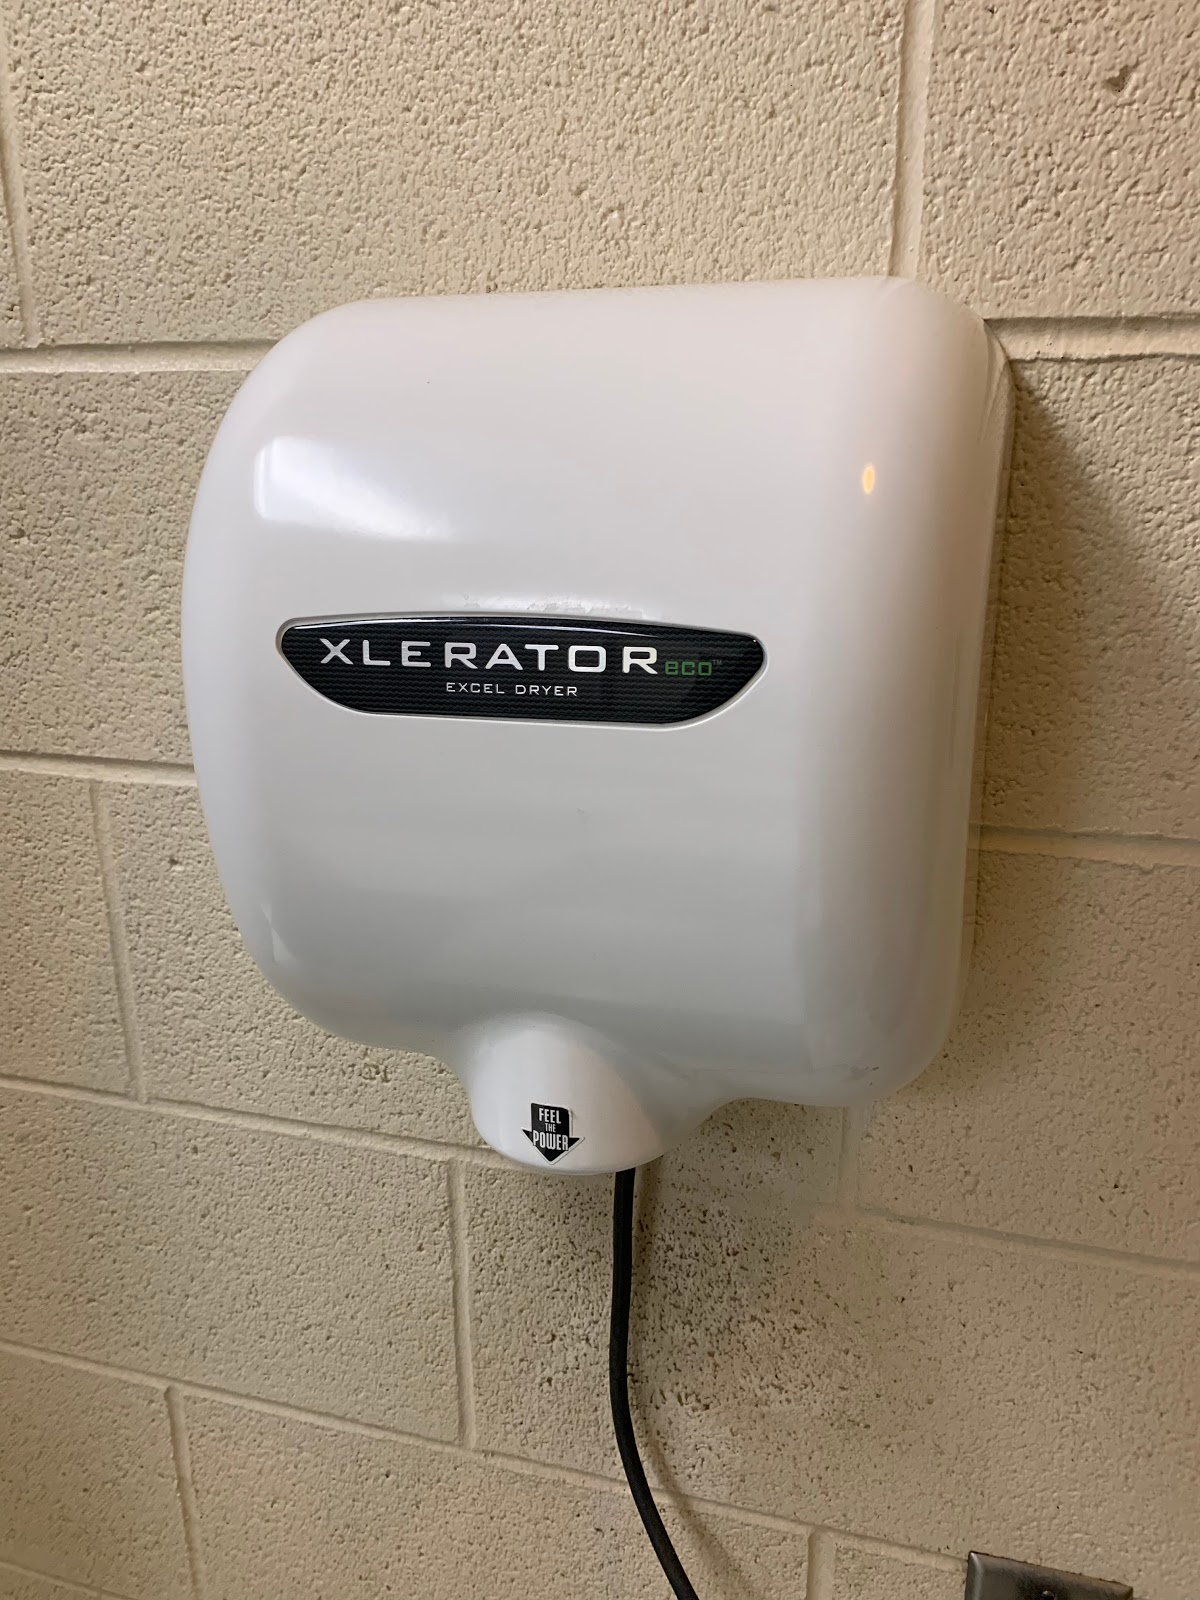 Xlerator hand dryer